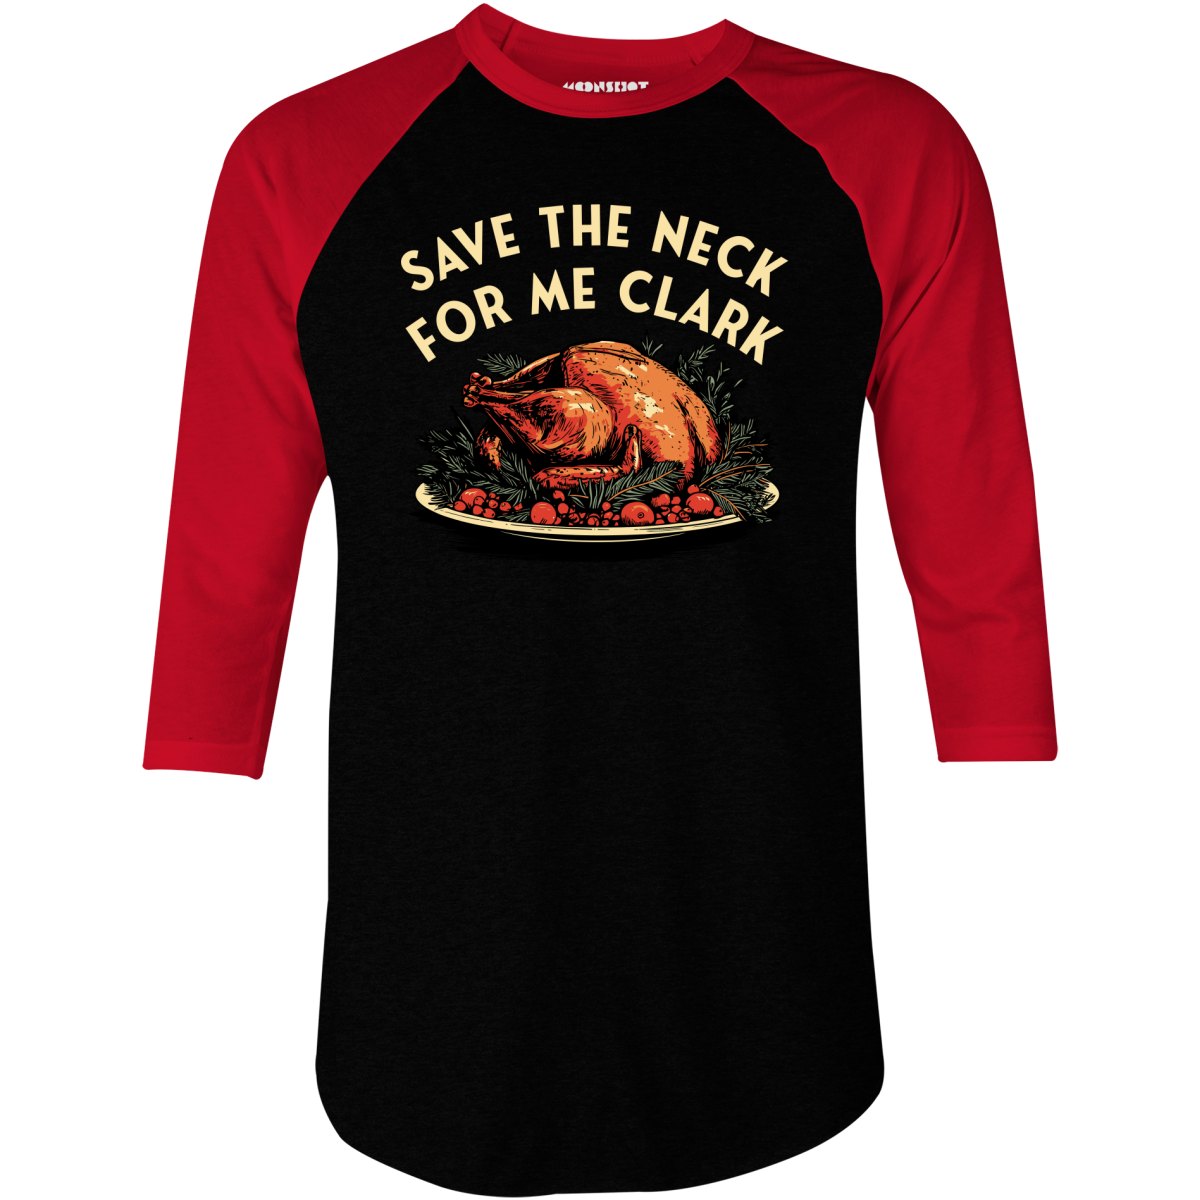 Save the Neck For Me Clark - 3/4 Sleeve Raglan T-Shirt